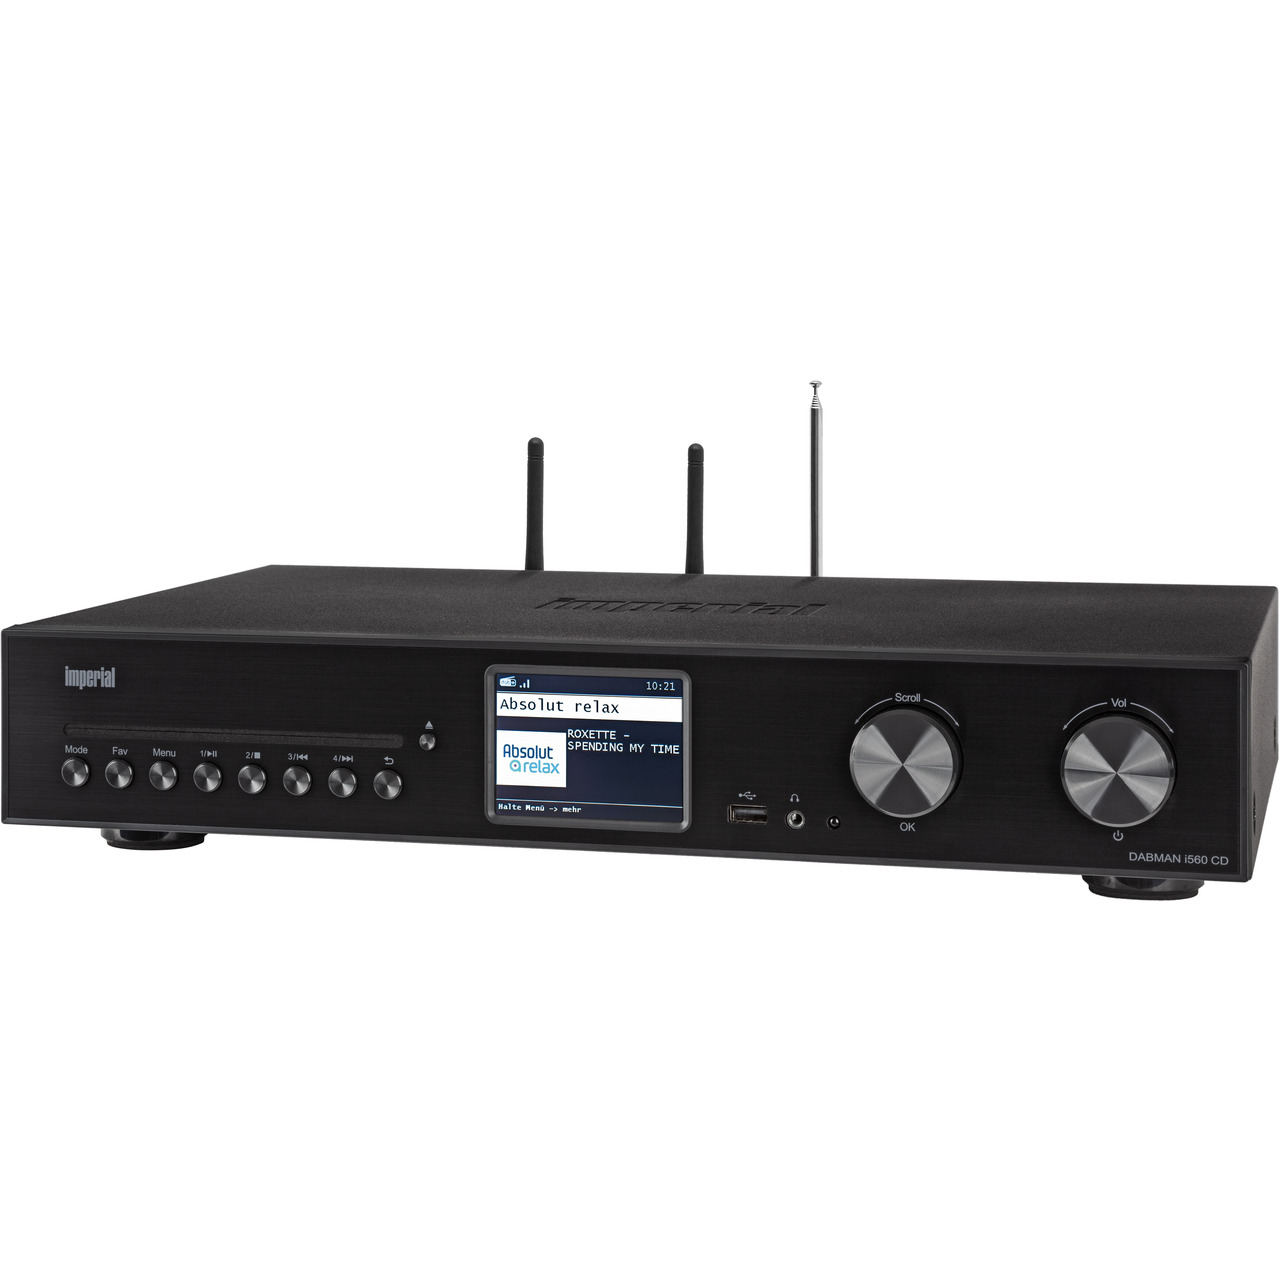  Imperial Radio-Hi-Fi-Tuner DABMAN i560 CD- DAB+-UKW-Internetradio- Verstrker- Bluetooth- CD-Player